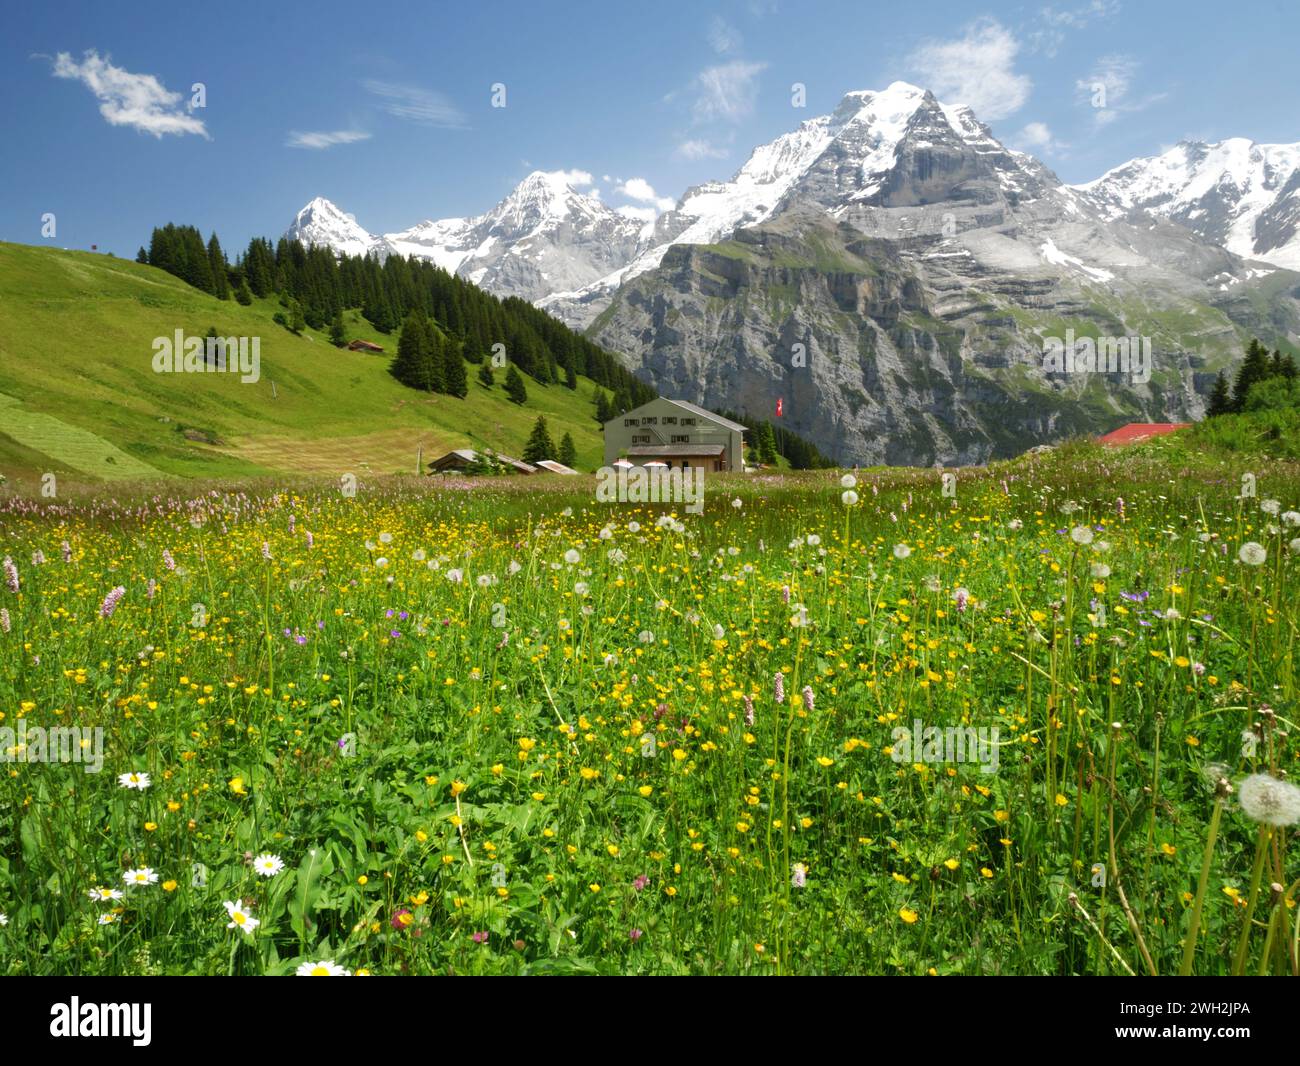 Blumenwiesen im Blumental, oberhalb des Dorfes Murren, Berner Oberland, Schweiz. Stockfoto